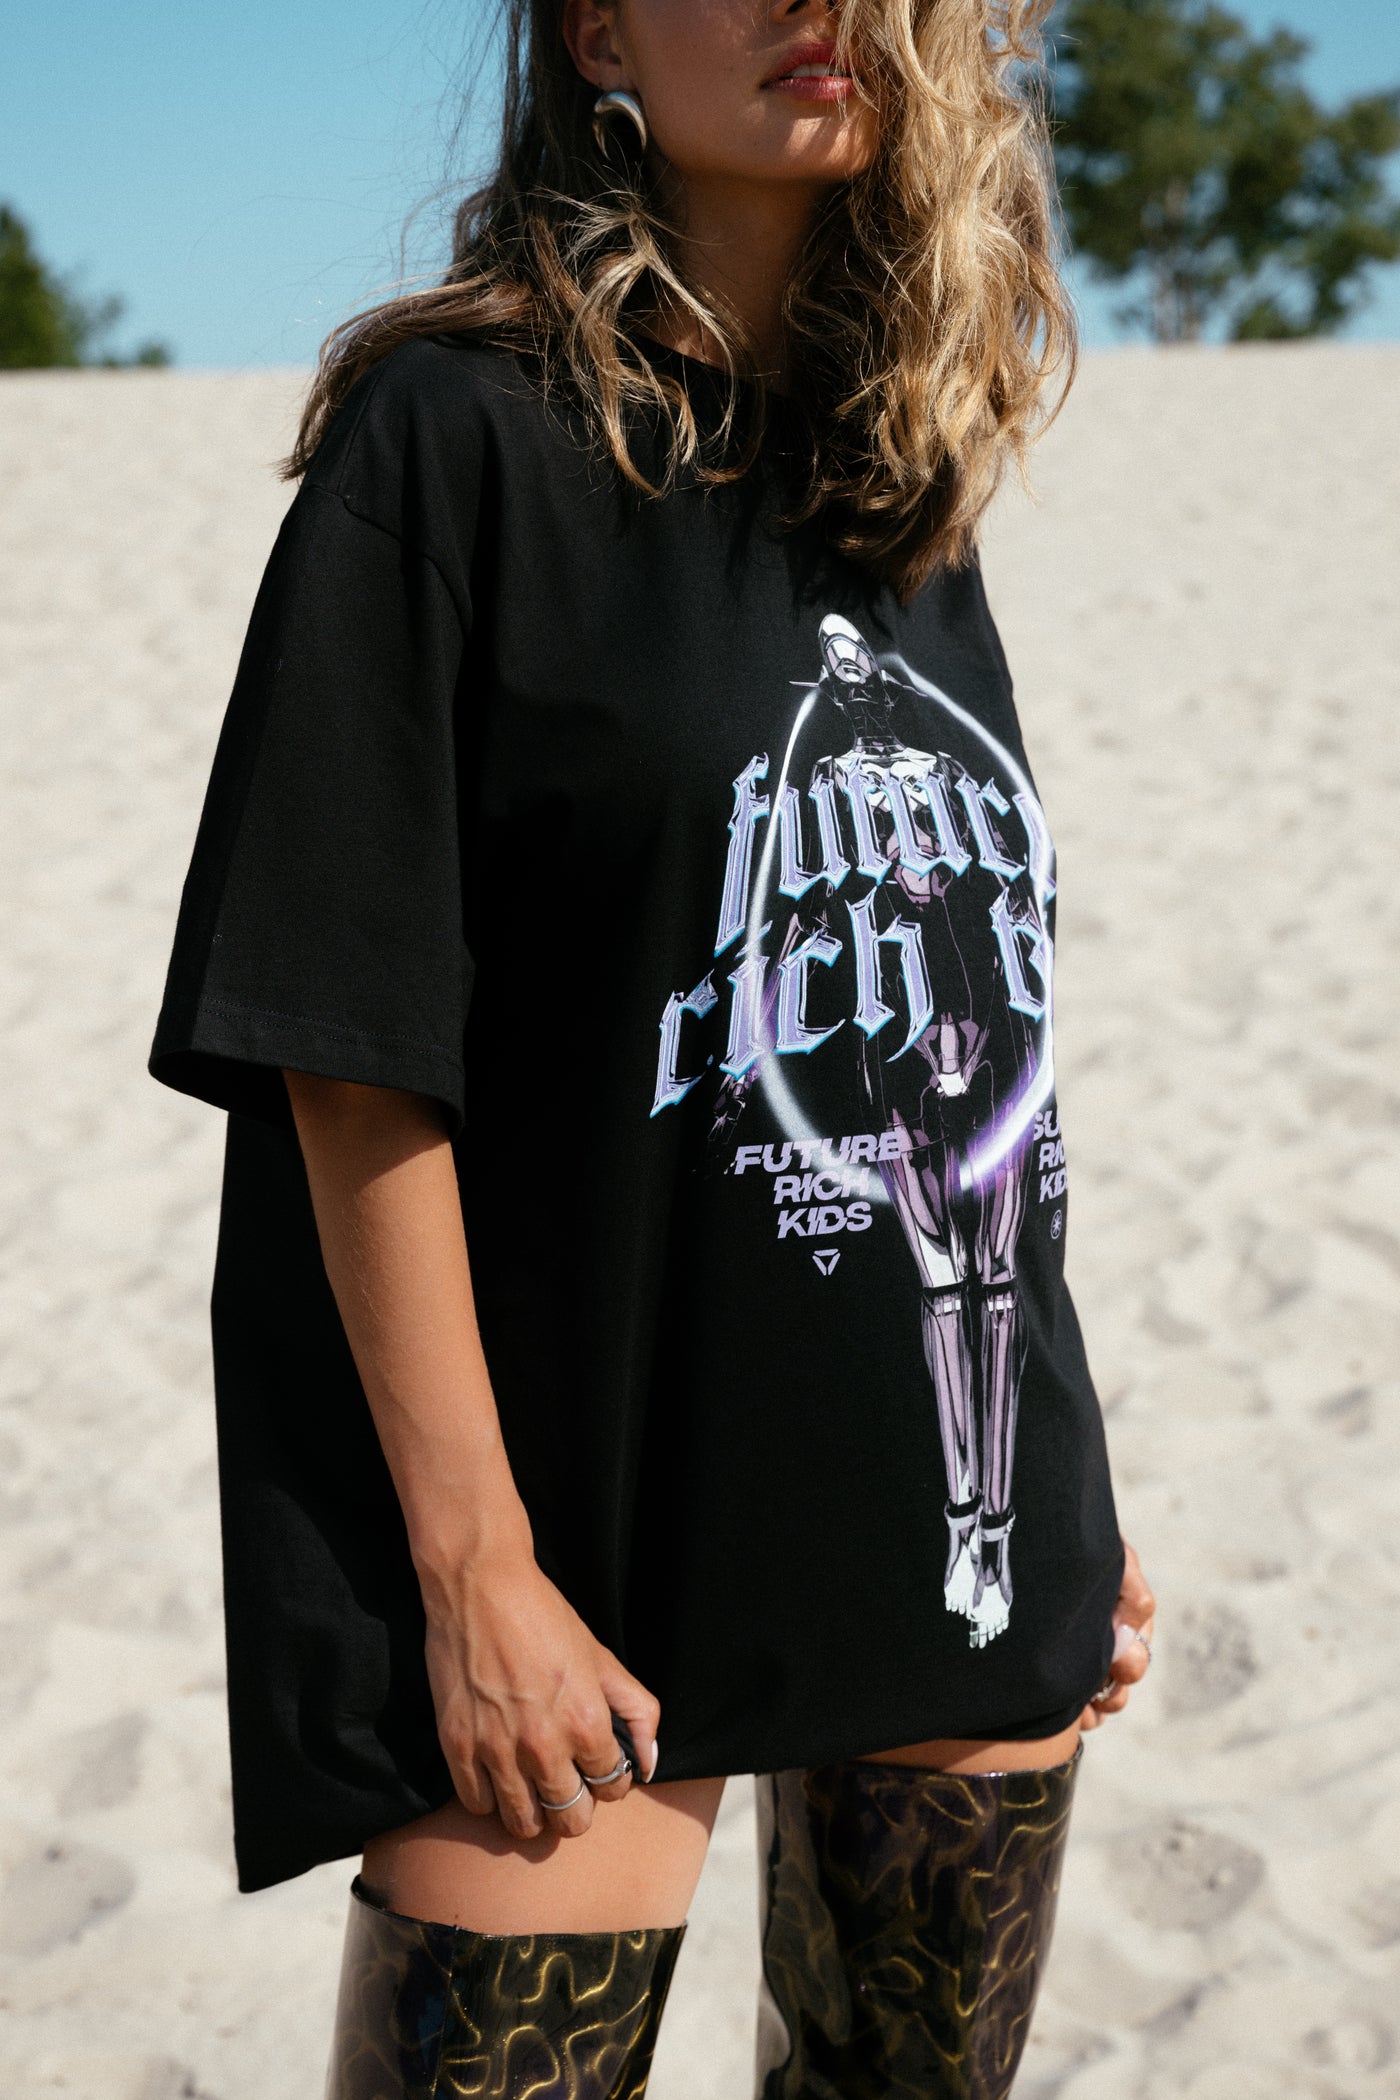 T-Shirt 'Future Rich Kid' Zwart met paars